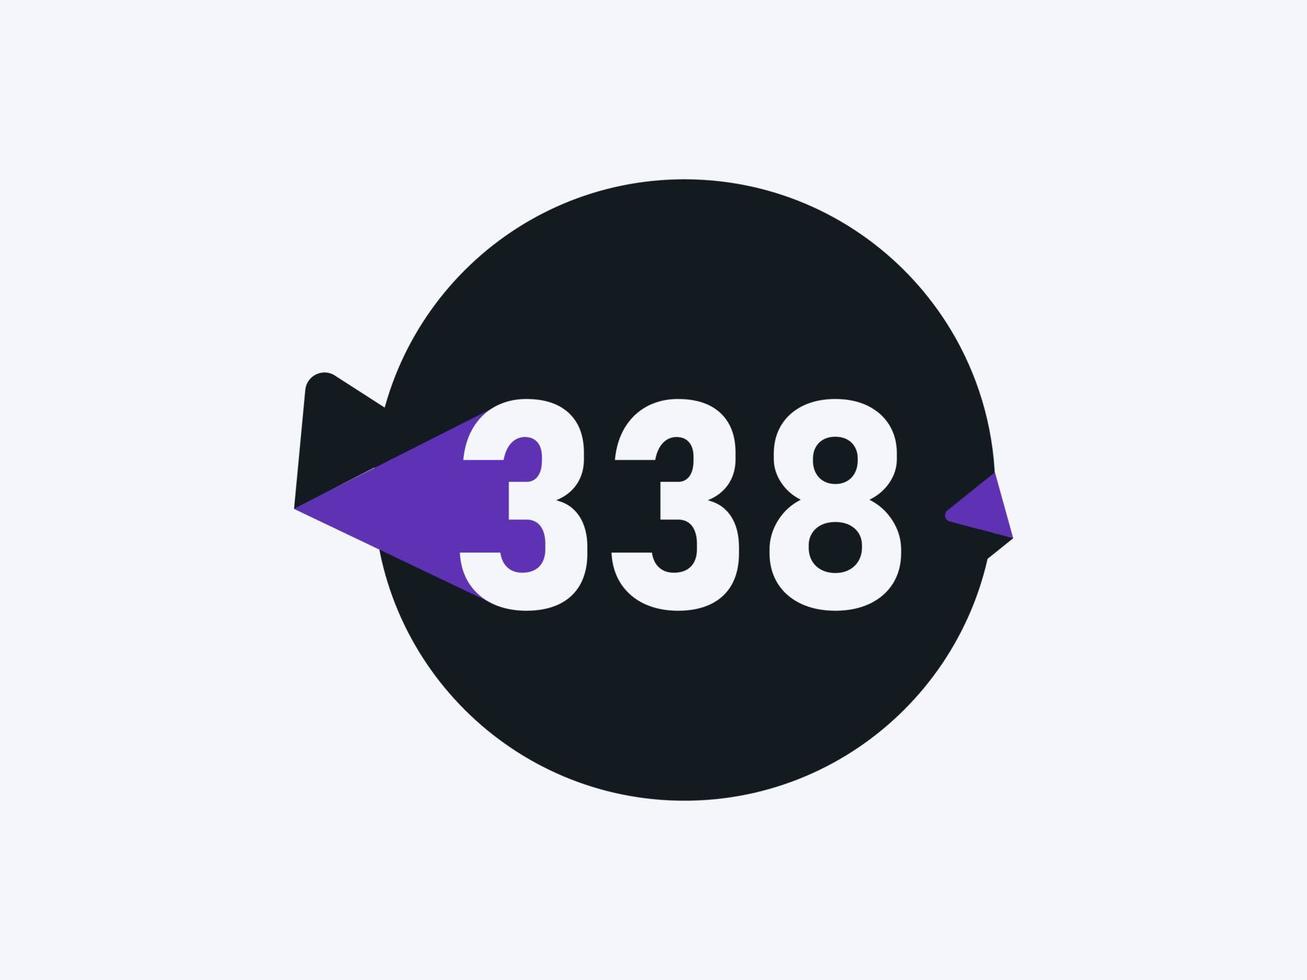 338 Number logo icon design vector image. Number logo icon design vector image